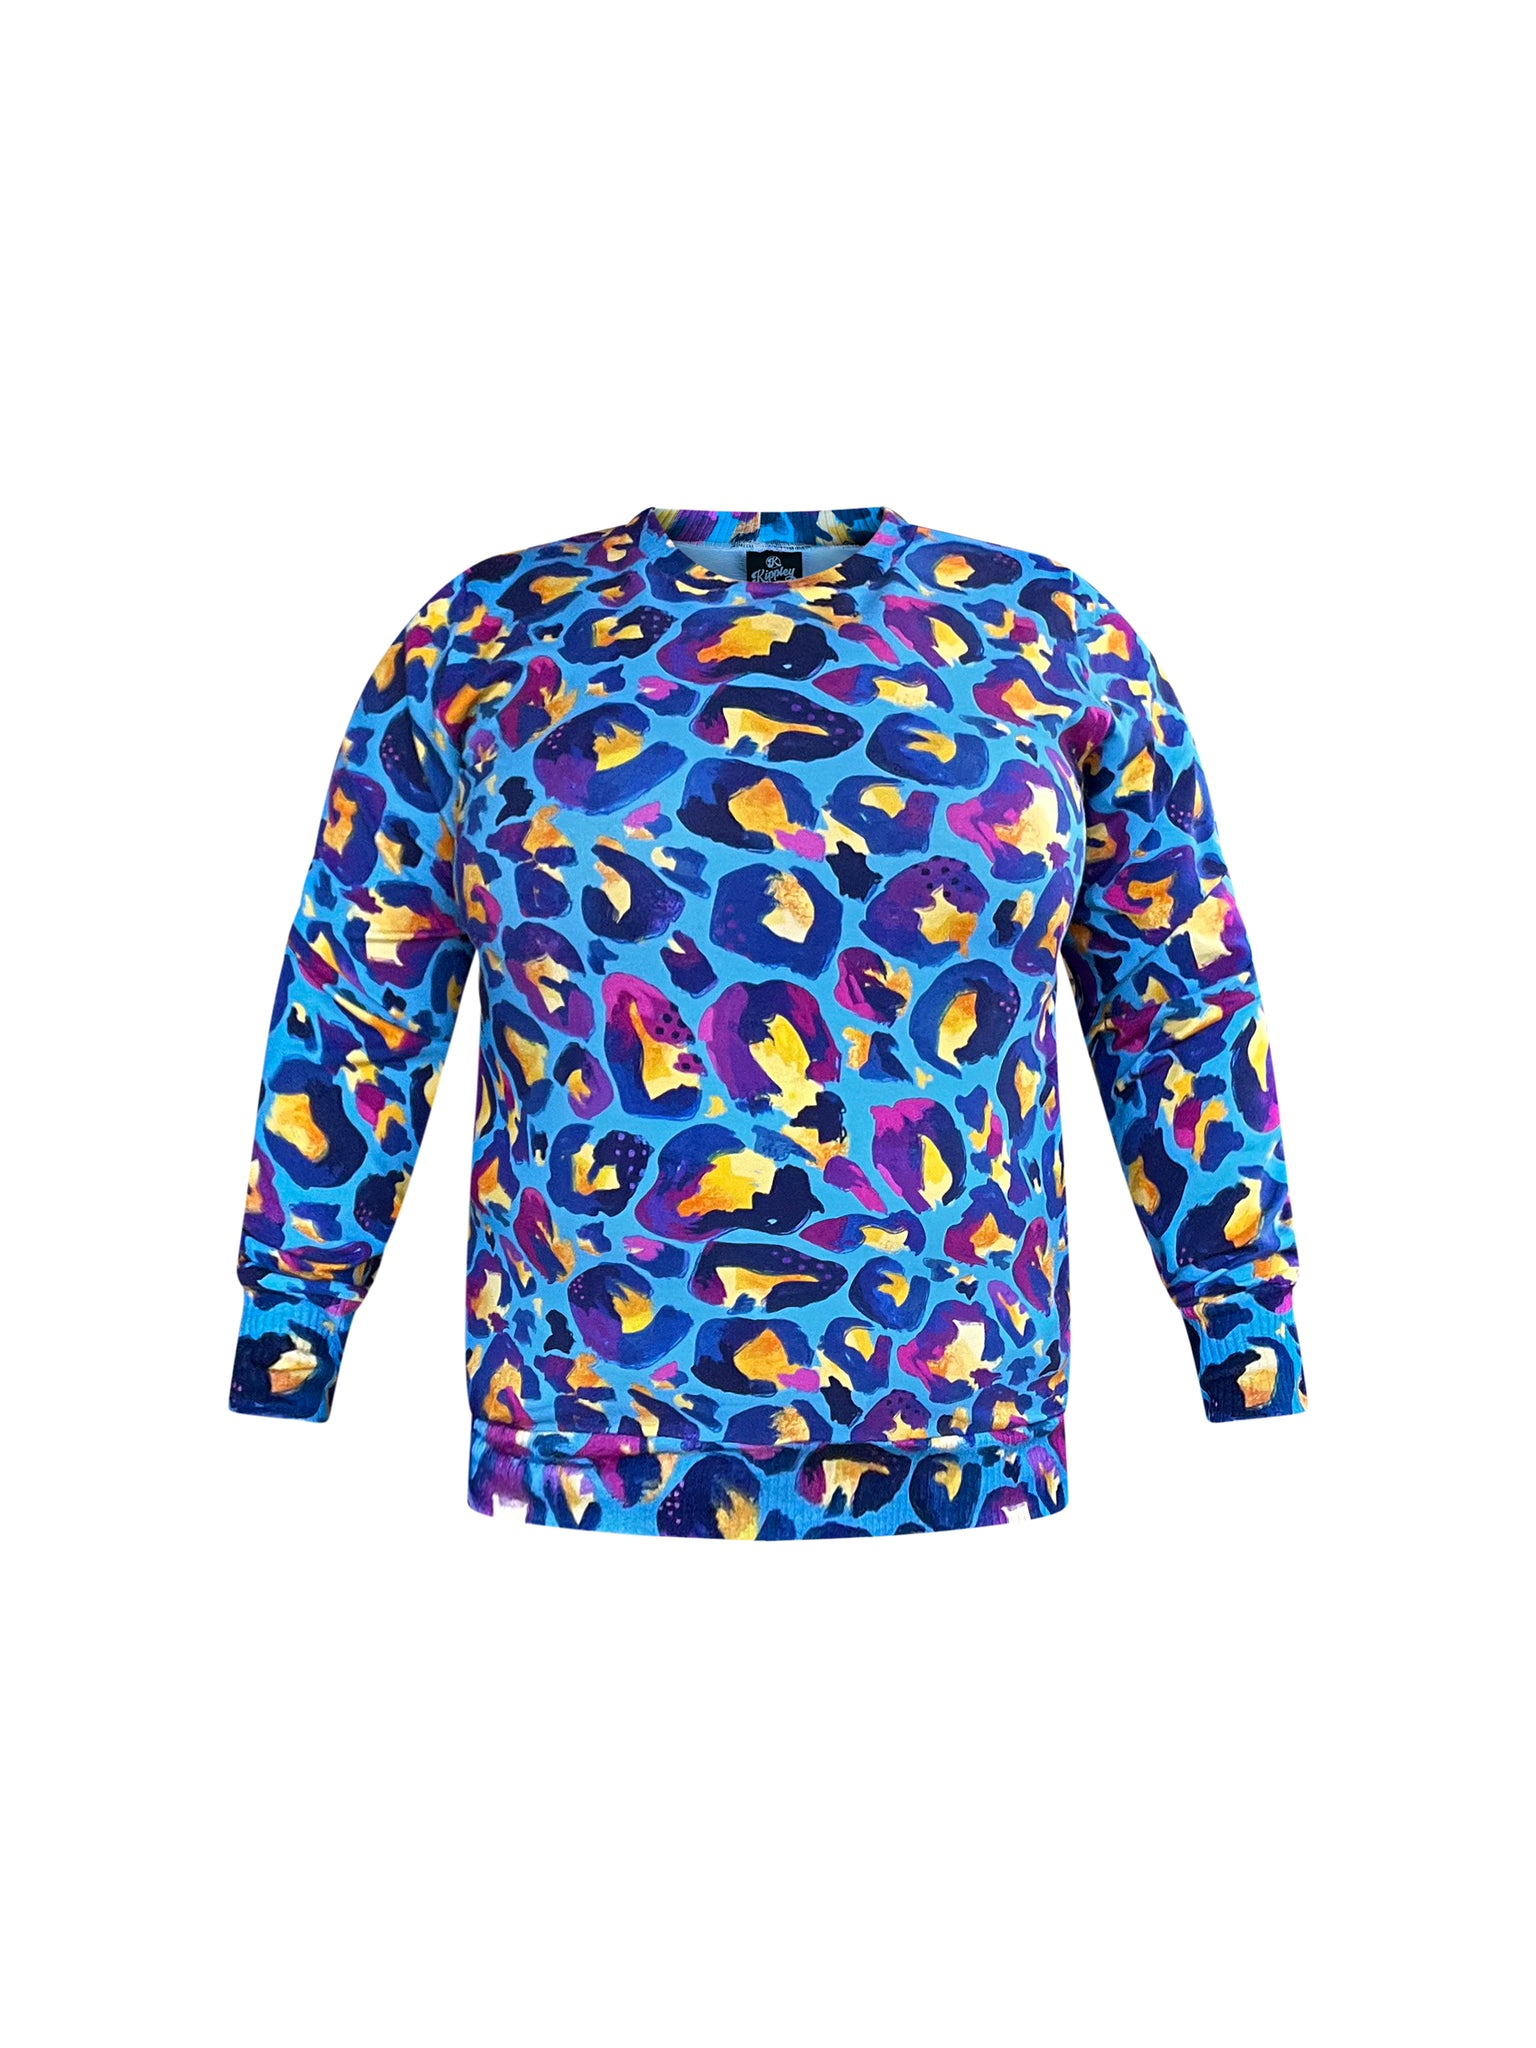 Ladies Sweatshirt in 'Blue Leopard' - Kasey Rainbow